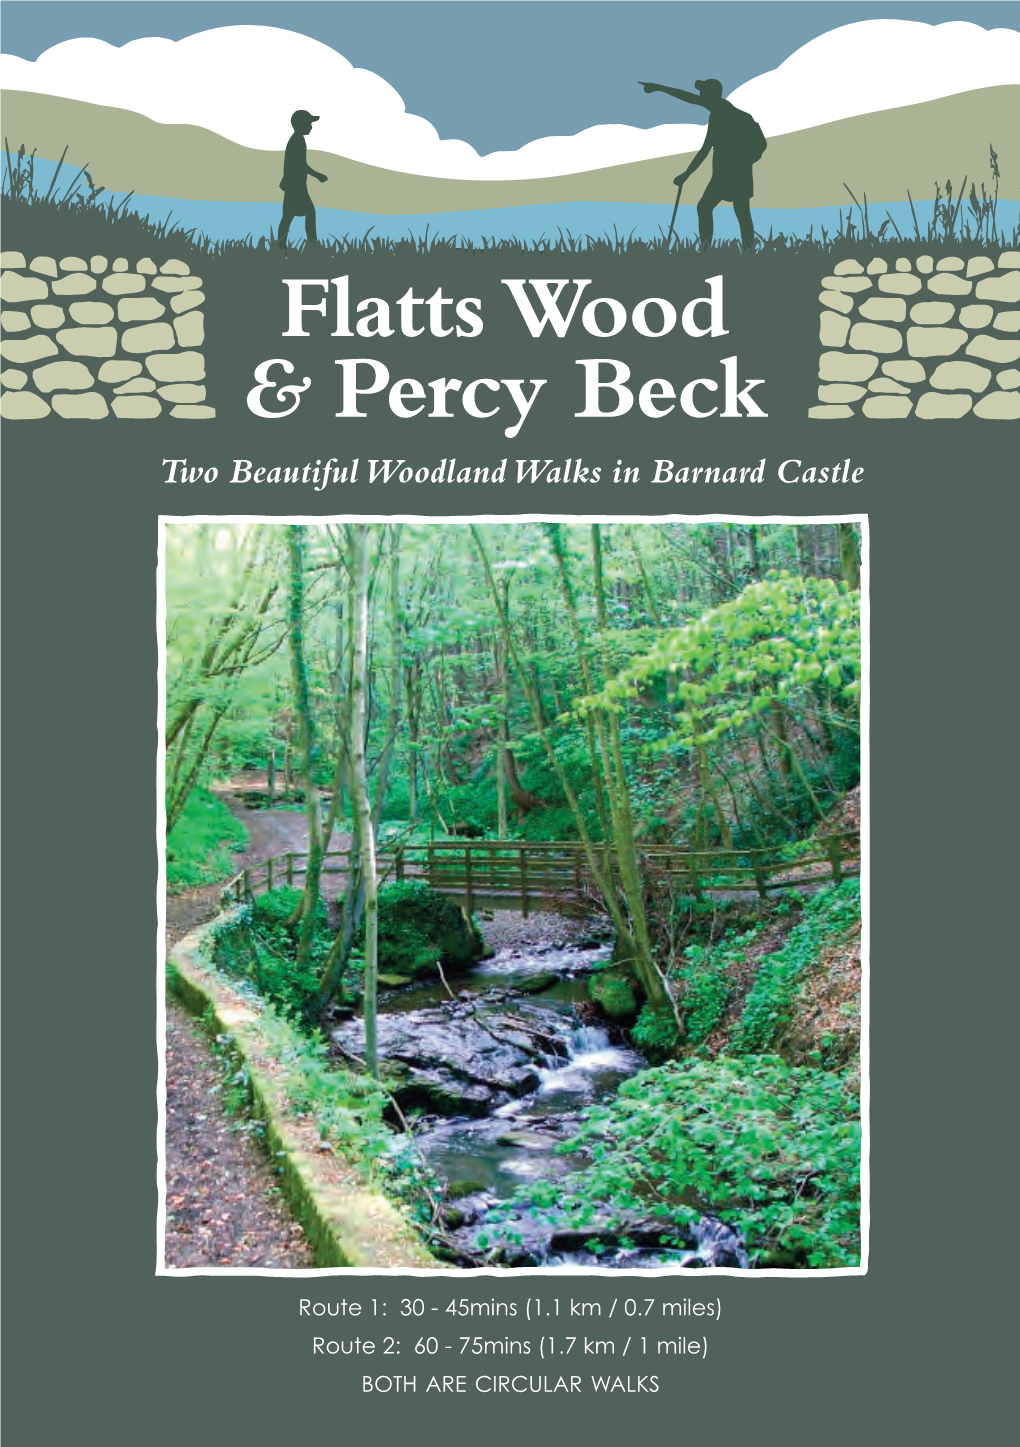 Flatts Wood & Percy Beck